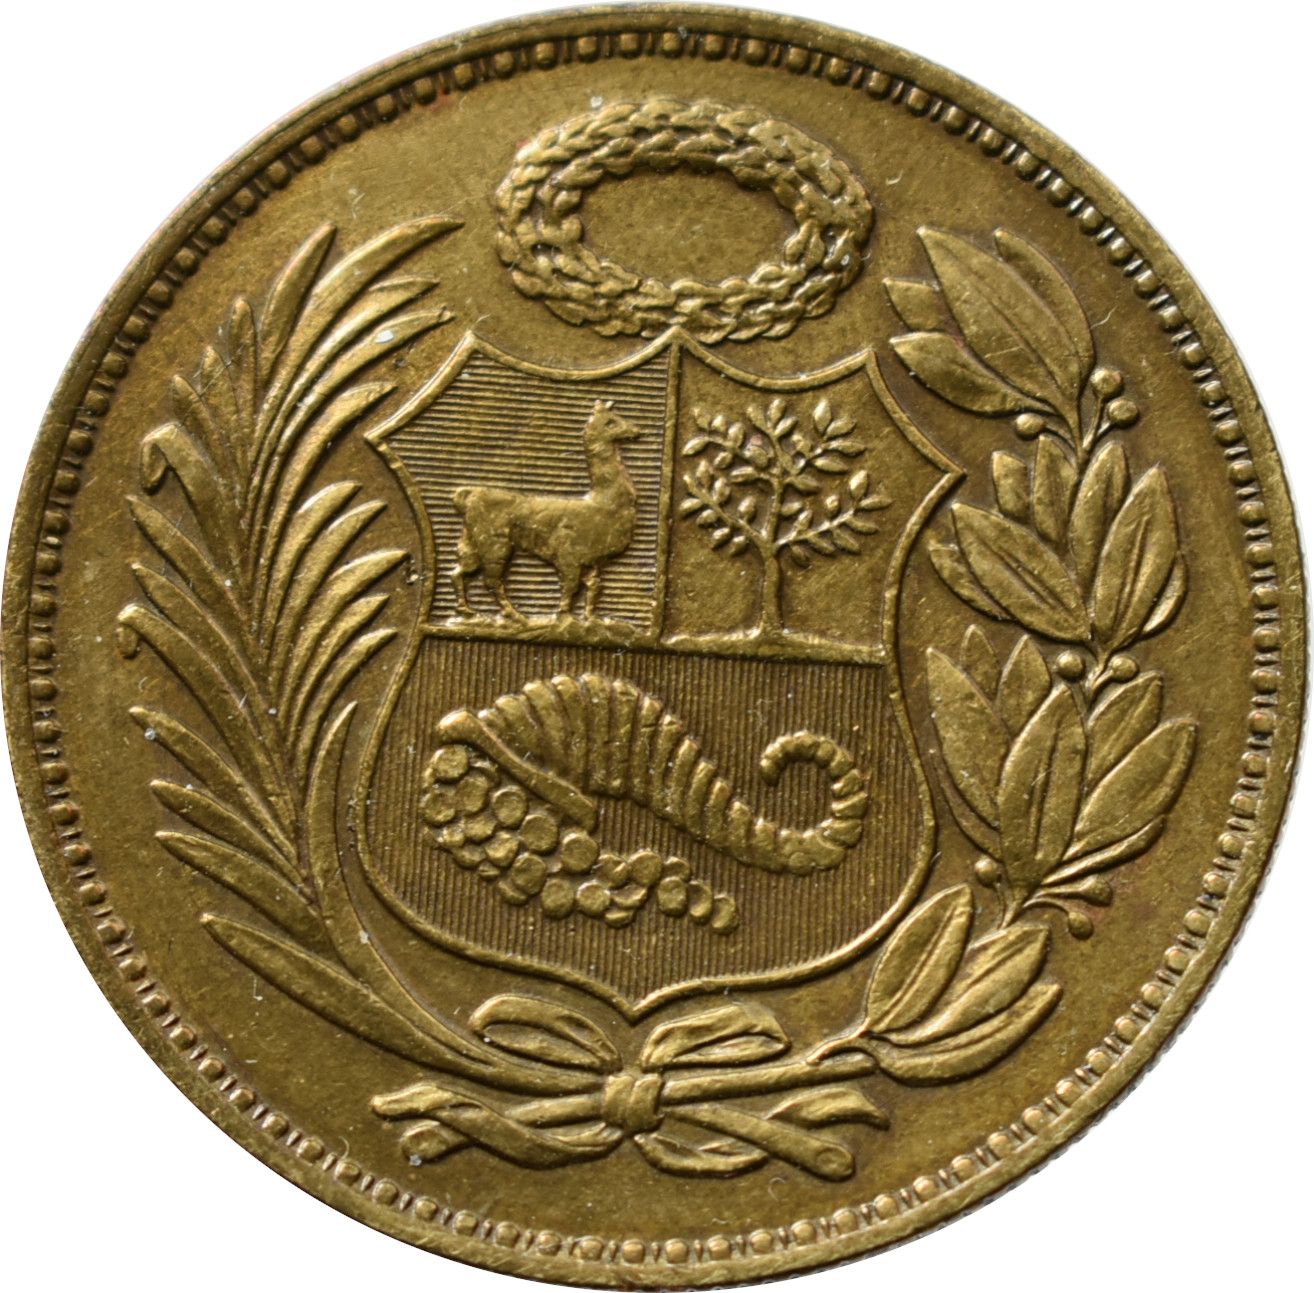 Peru 1 Sol de Oro 1951